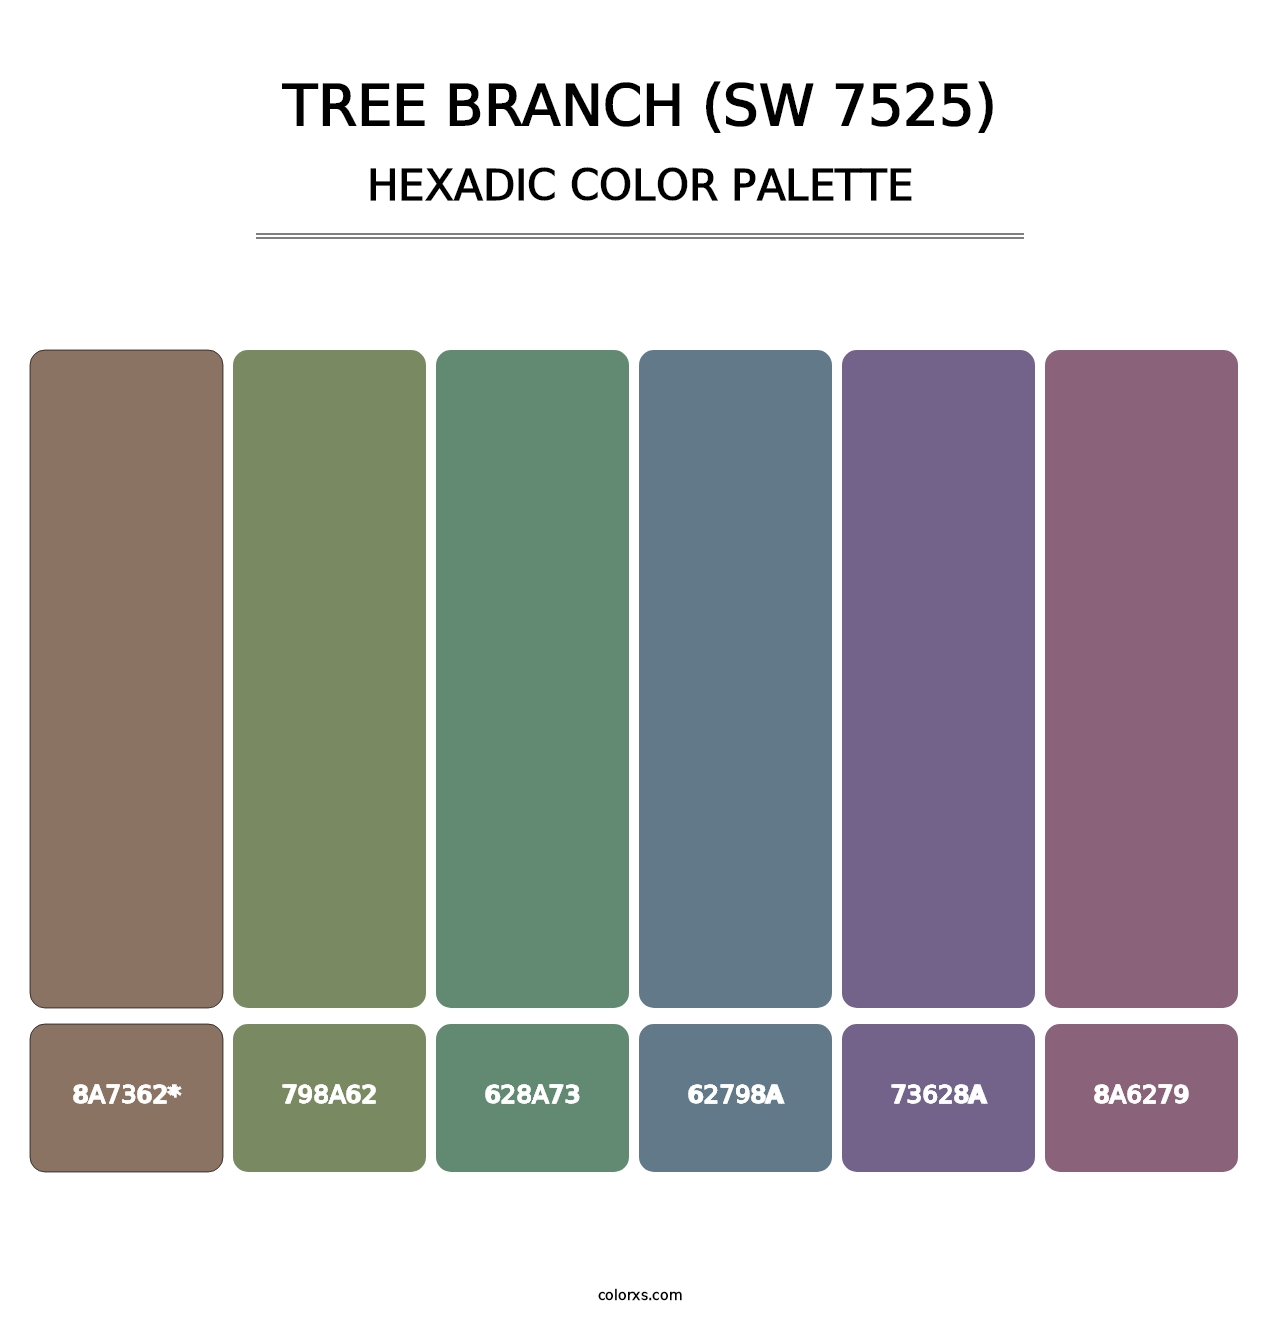 Tree Branch (SW 7525) - Hexadic Color Palette